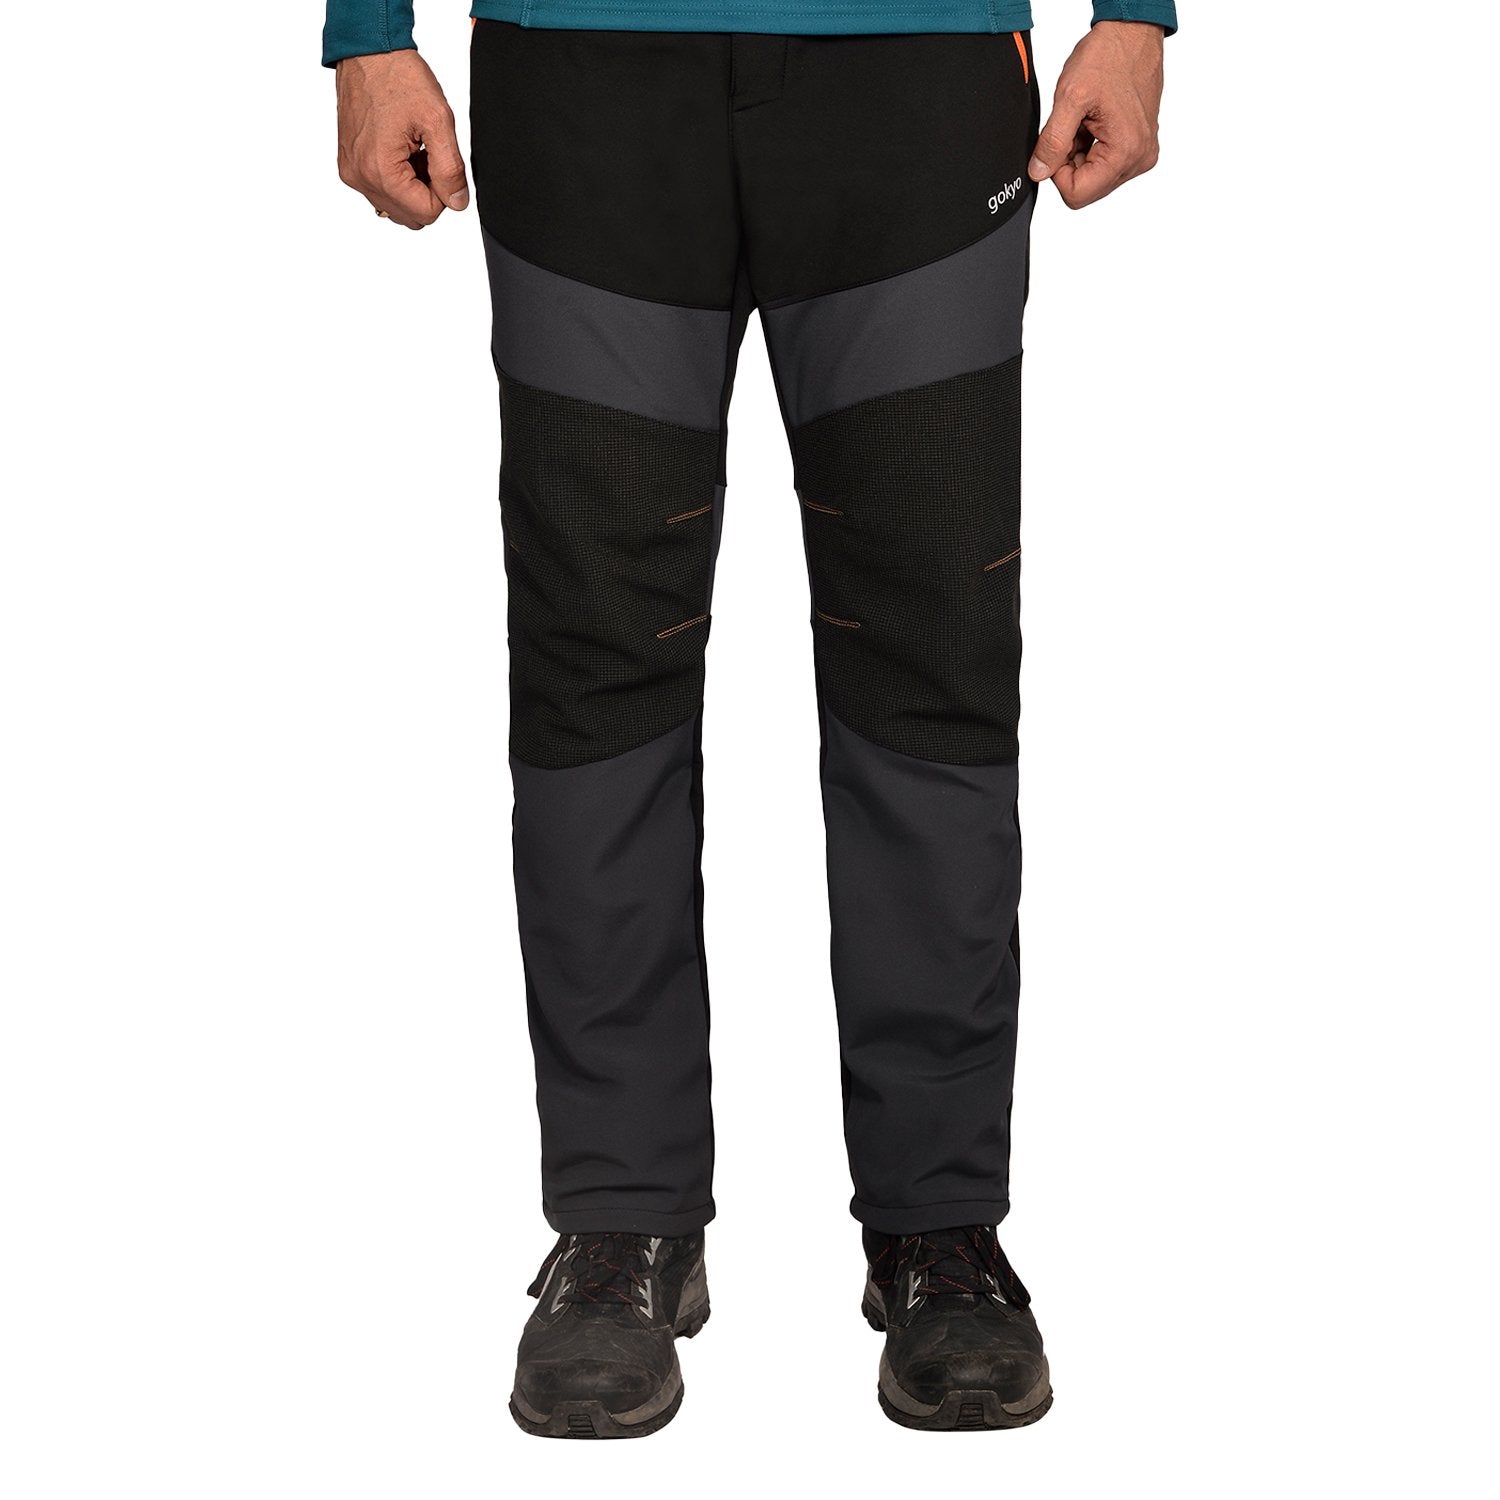 Buy Gokyo K2 Cold Weather Trekking & Outdoor Sherpa Pants Black | Trekking & Hiking Pants at Gokyo Outdoor Clothing & Gear